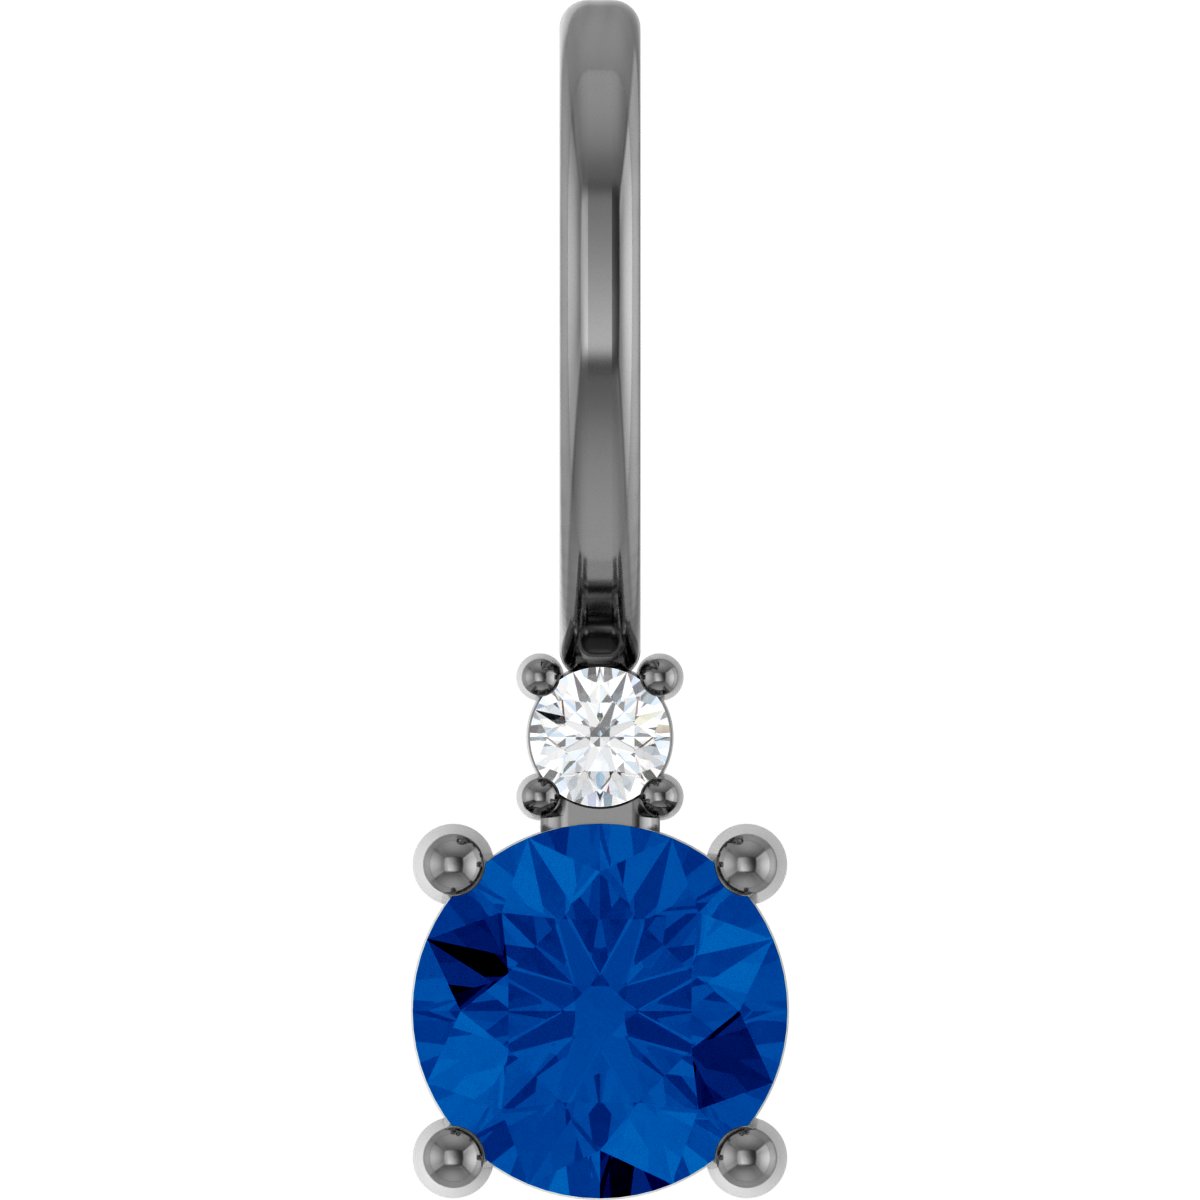 14K Yellow Lab-Grown Blue Sapphire & .015 CT Natural Diamond Charm/Pendant